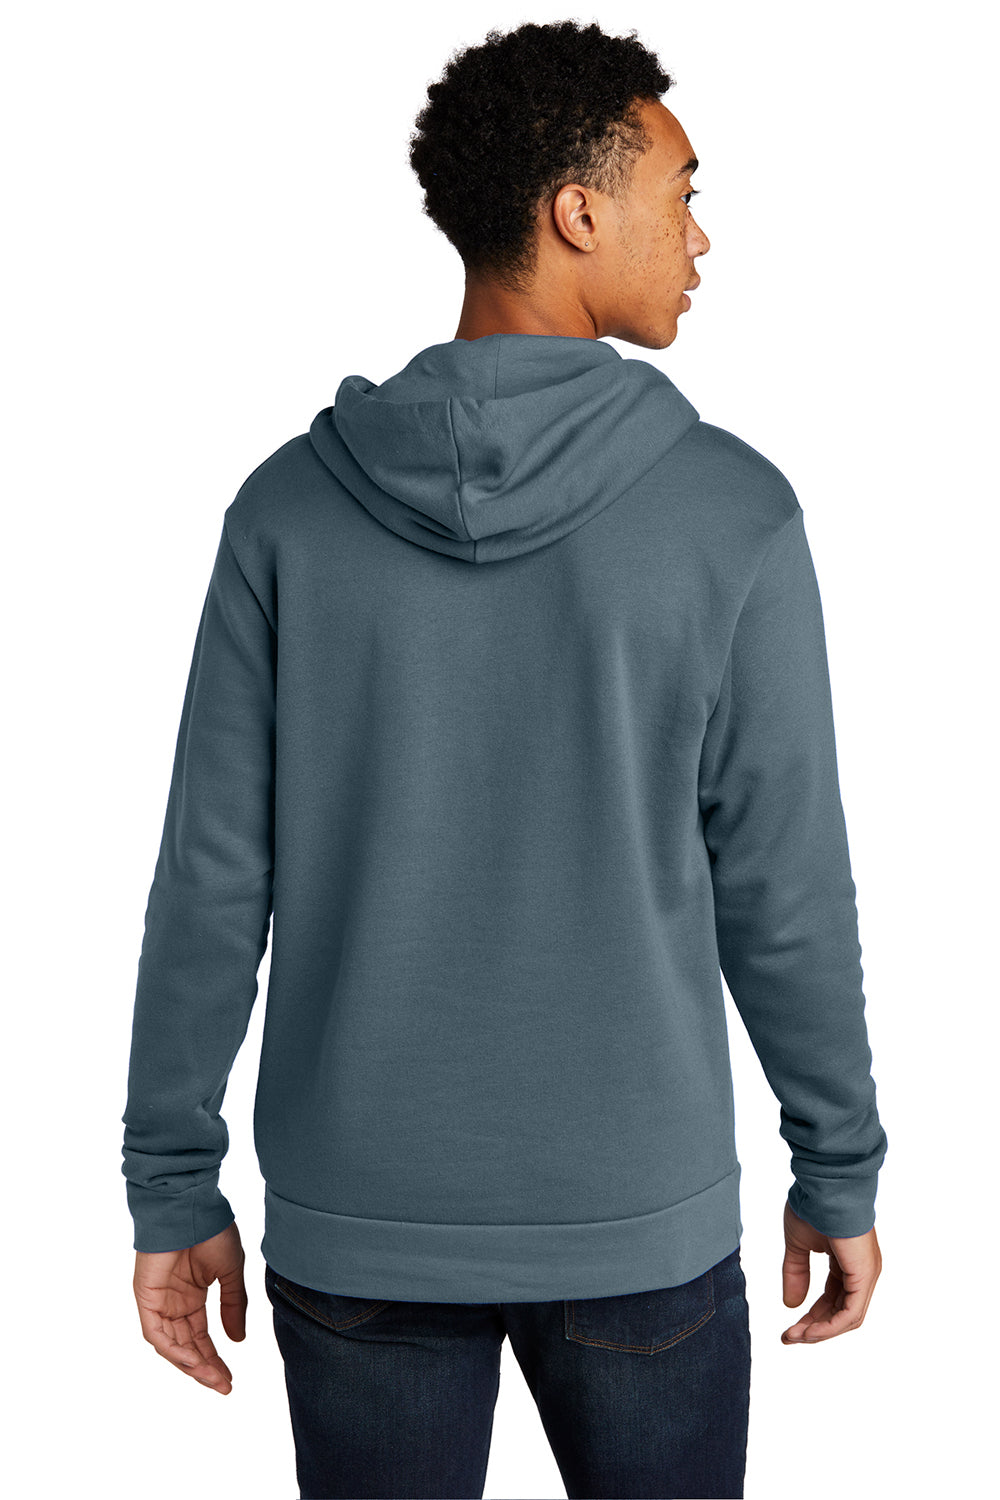 Next Level Mens Fleece Hooded Sweatshirt Hoodie Antique Denim Blue Back